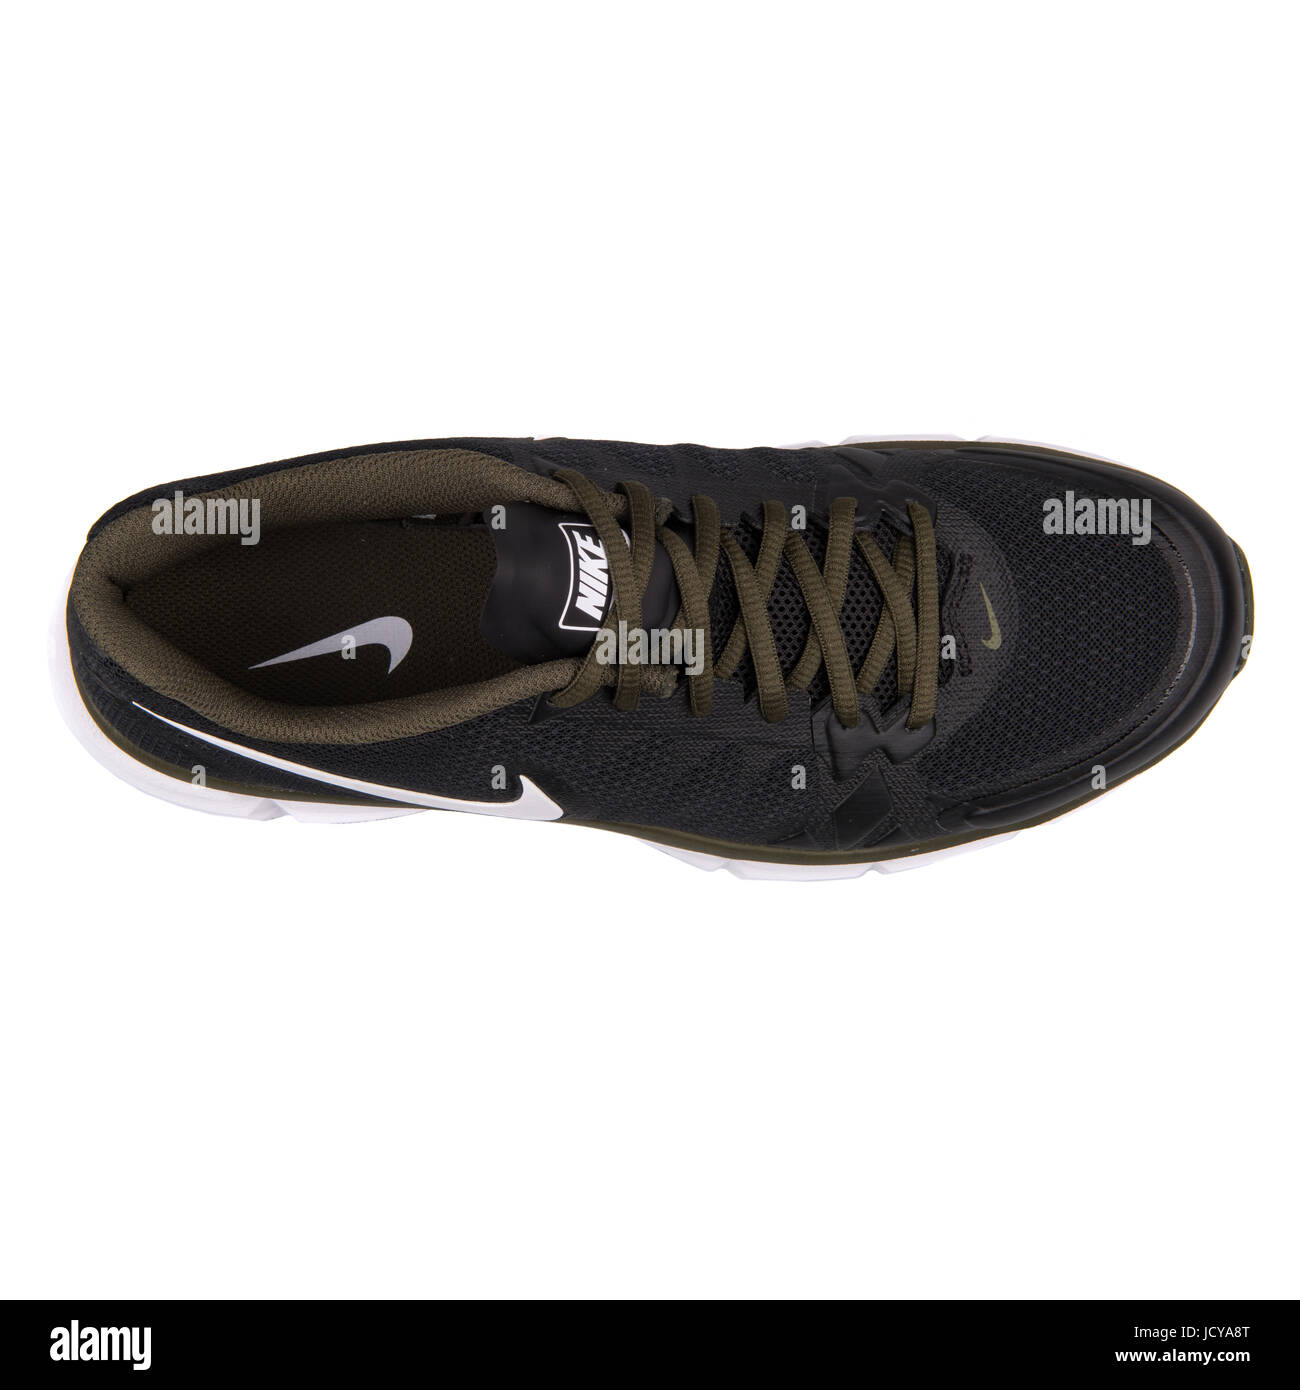 Nike Dual Fusion TR 6 Black and Khaki Men's Running Shoes - 704889-013  Stock Photo - Alamy